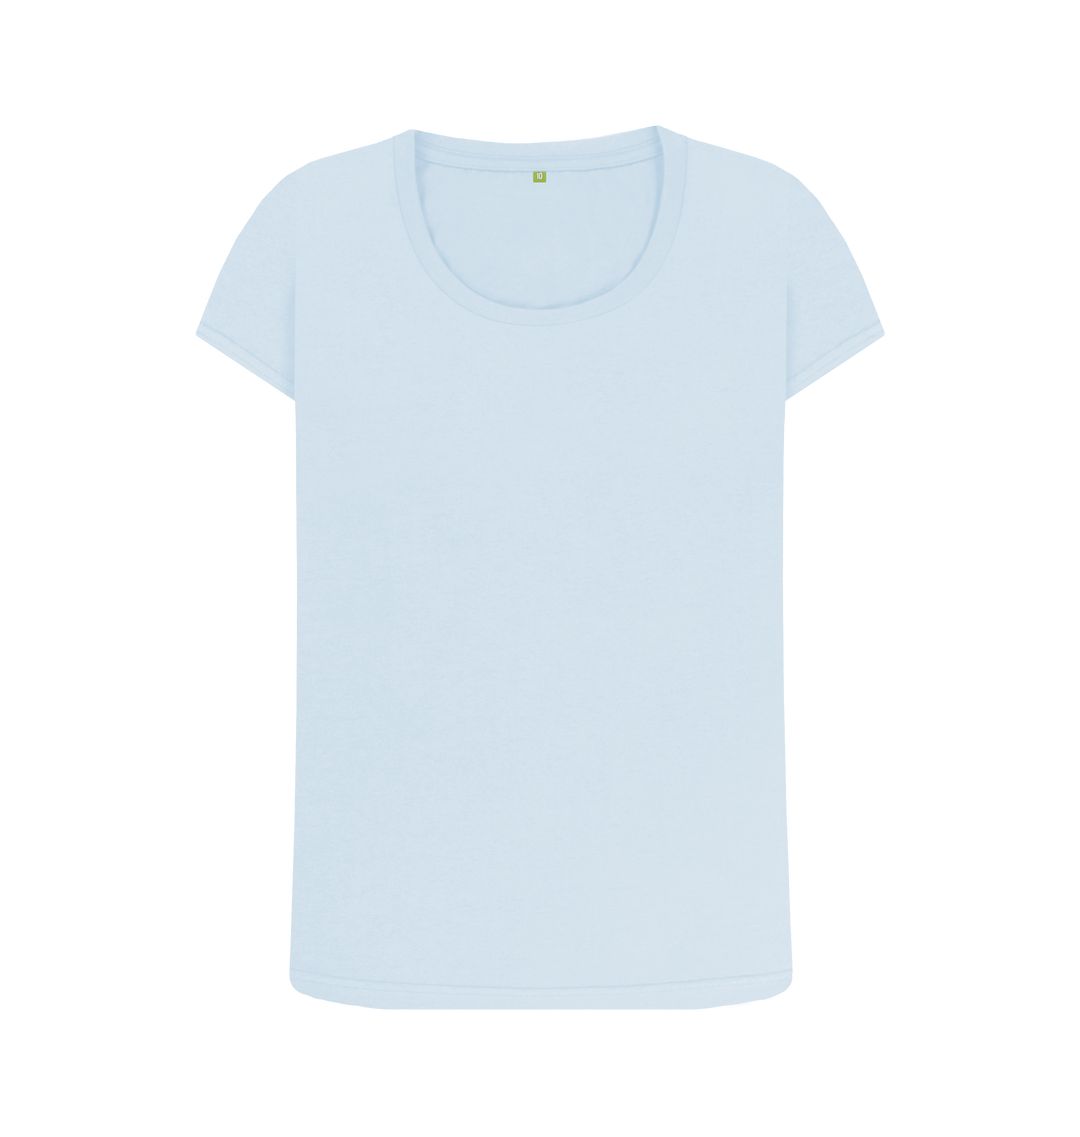 Sky Blue Women's organic cotton scoop neck t-shirt